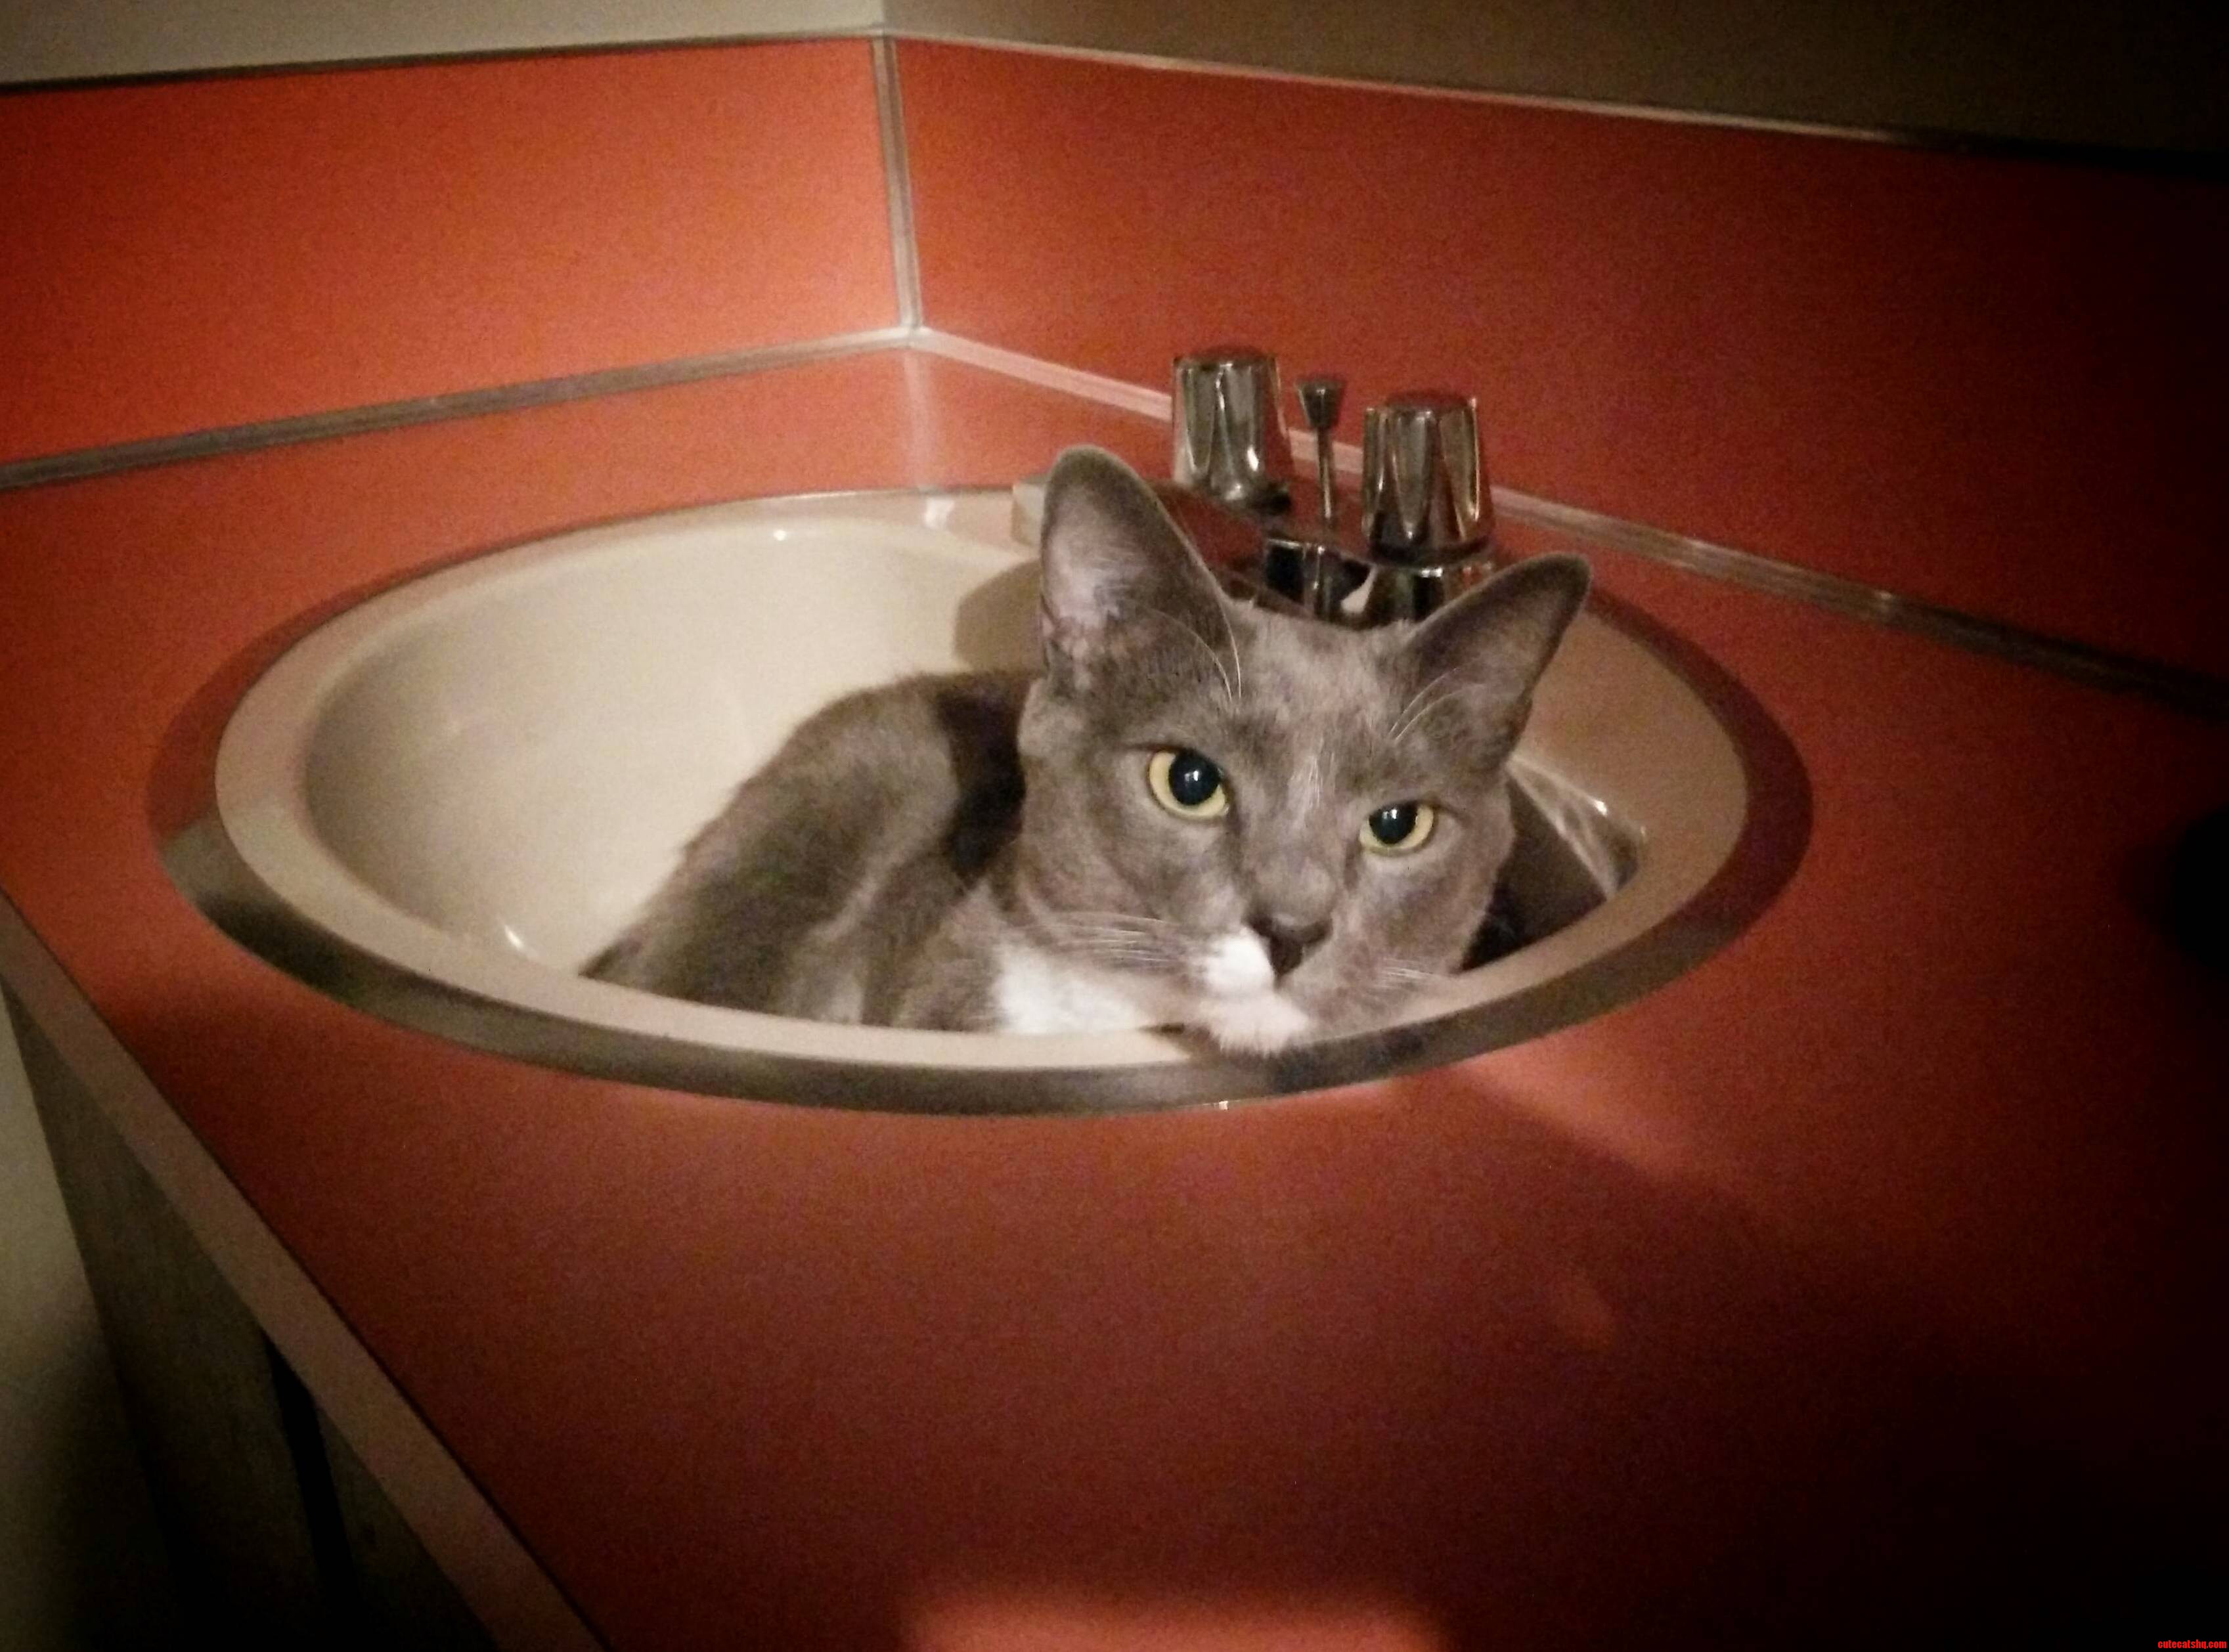 My friends cat likes sleeping in the bath sink